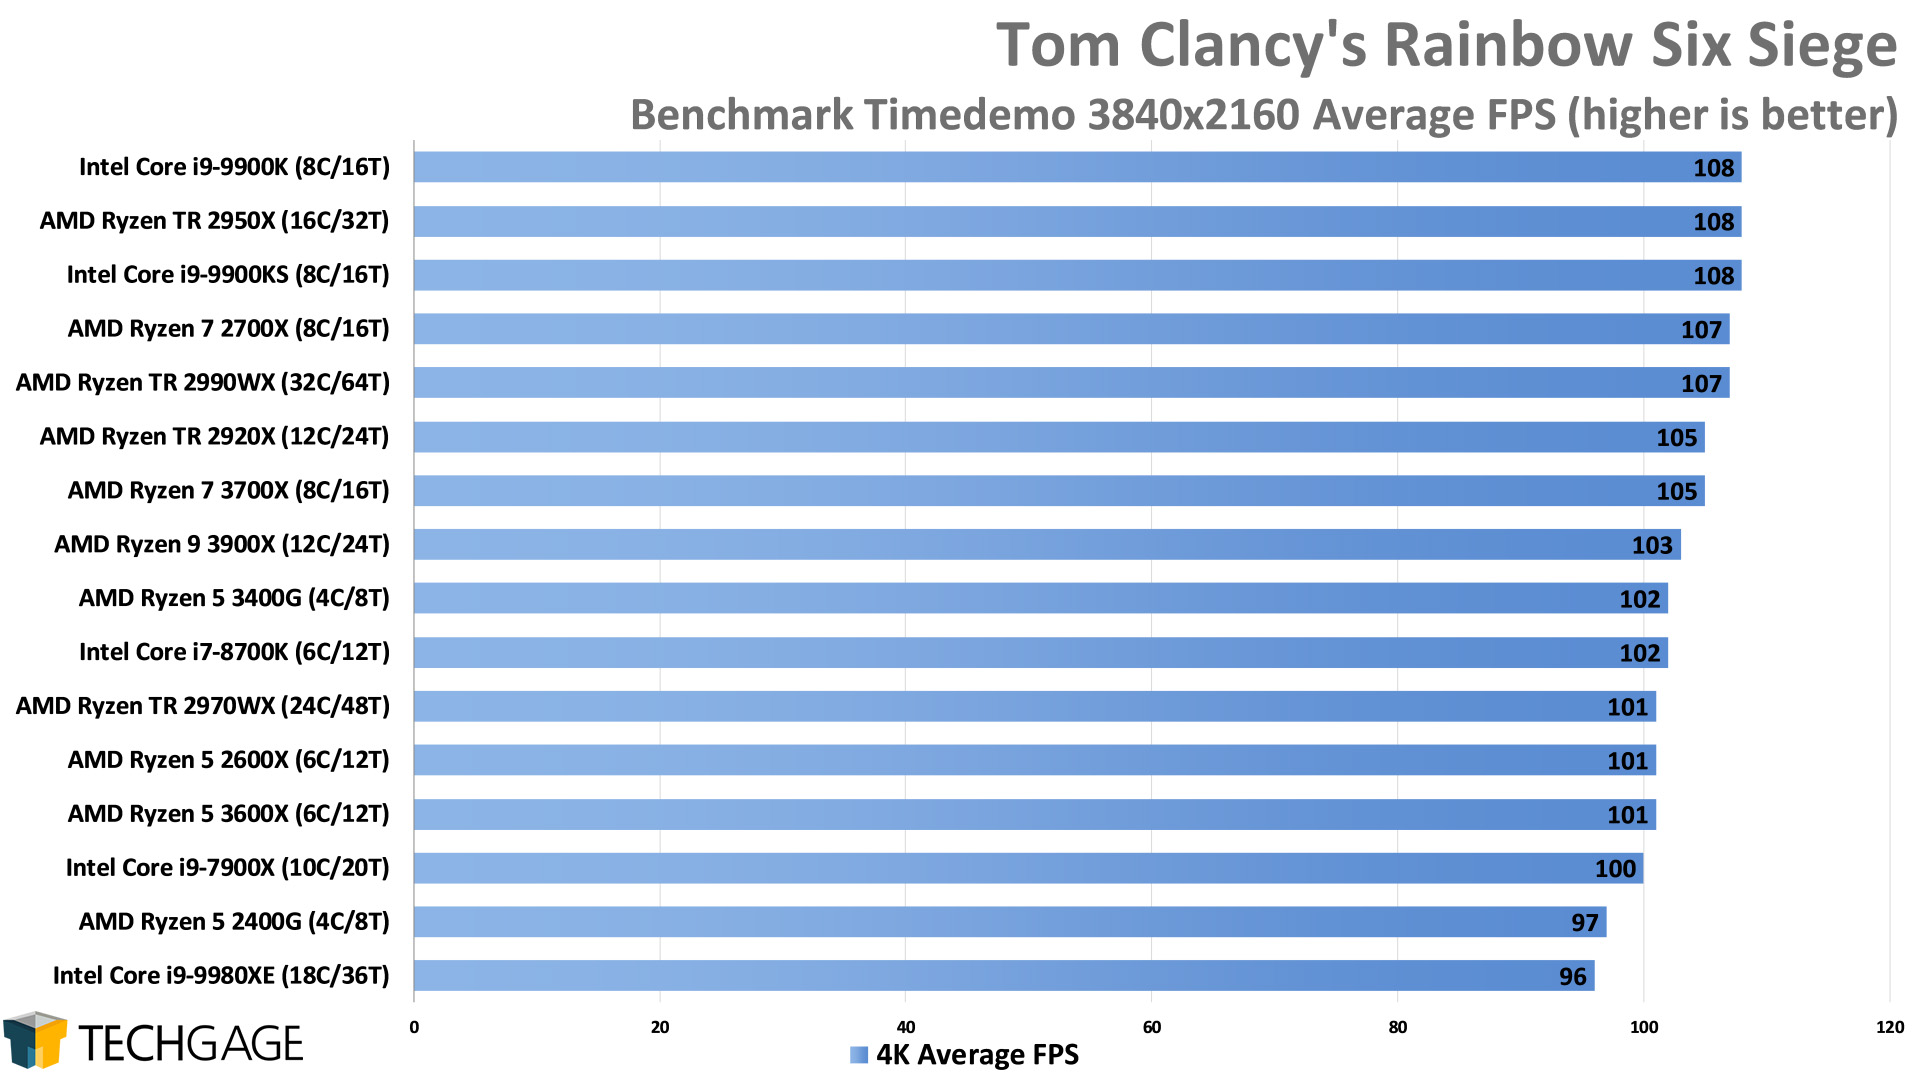 Tom Clancy's Rainbow Six Siege - 4K Average FPS (Intel Core i9-9900KS)